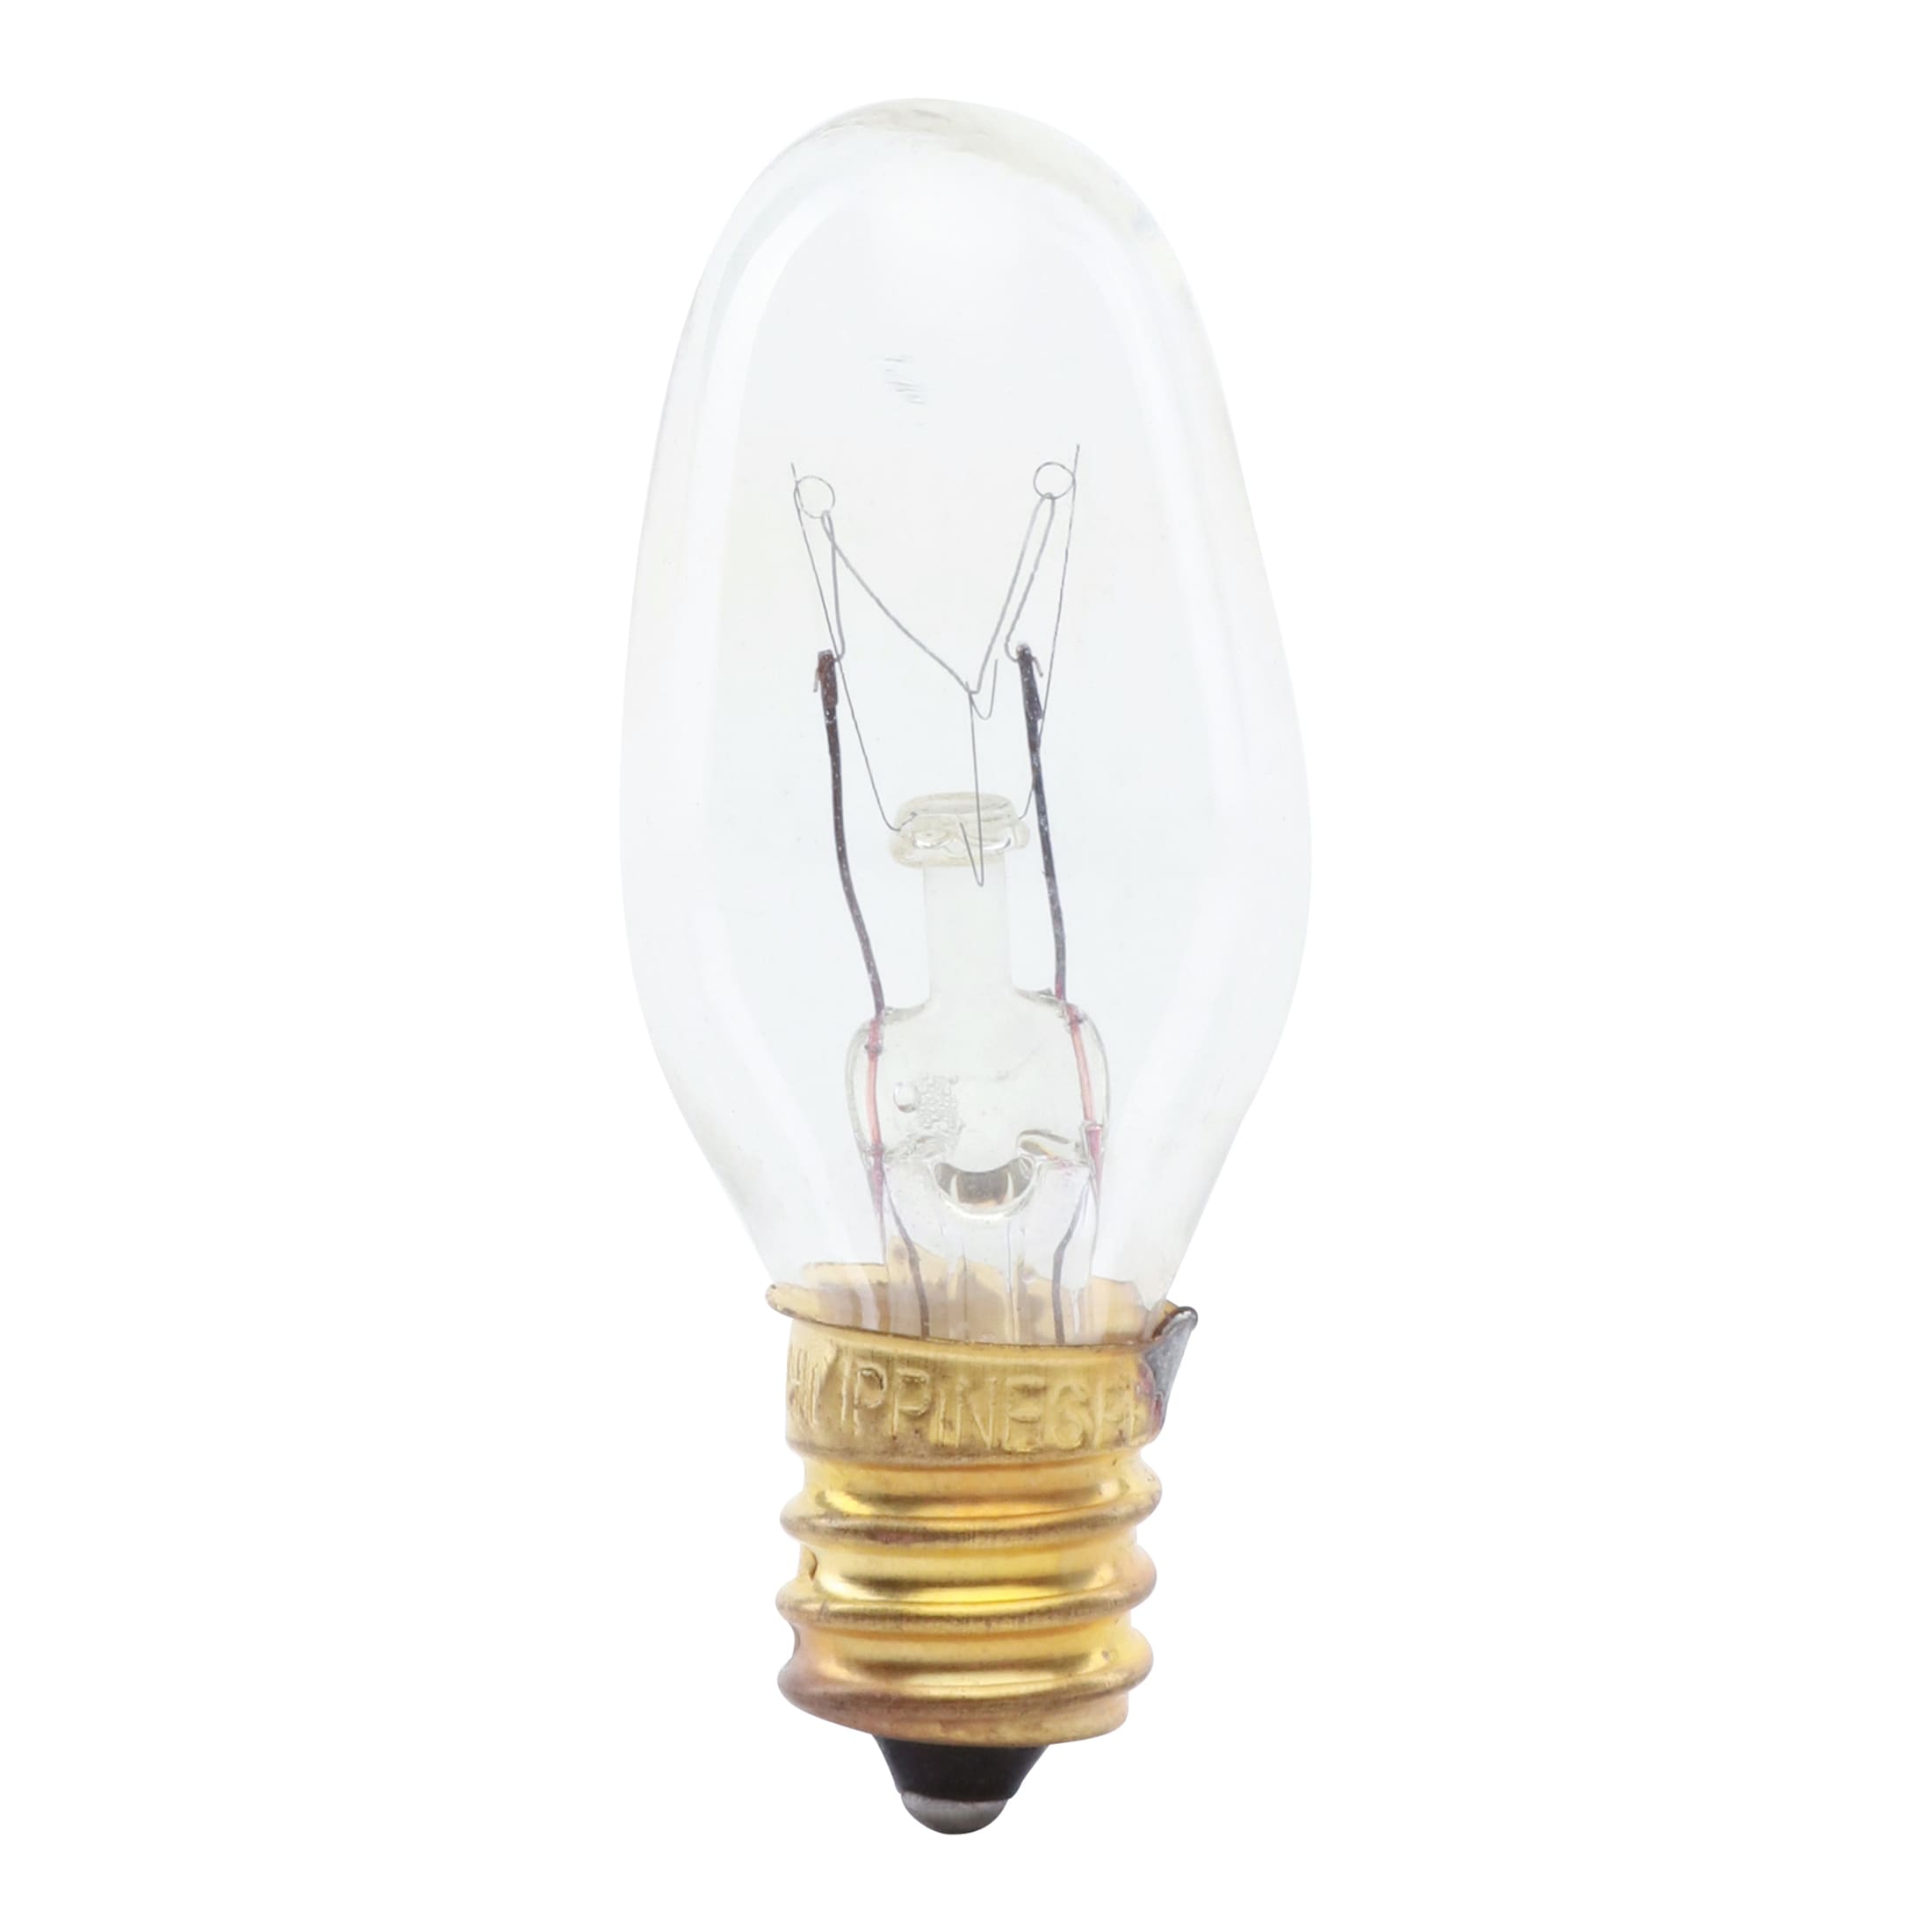 LED 7/16 Light Bulb for Sewing Machine